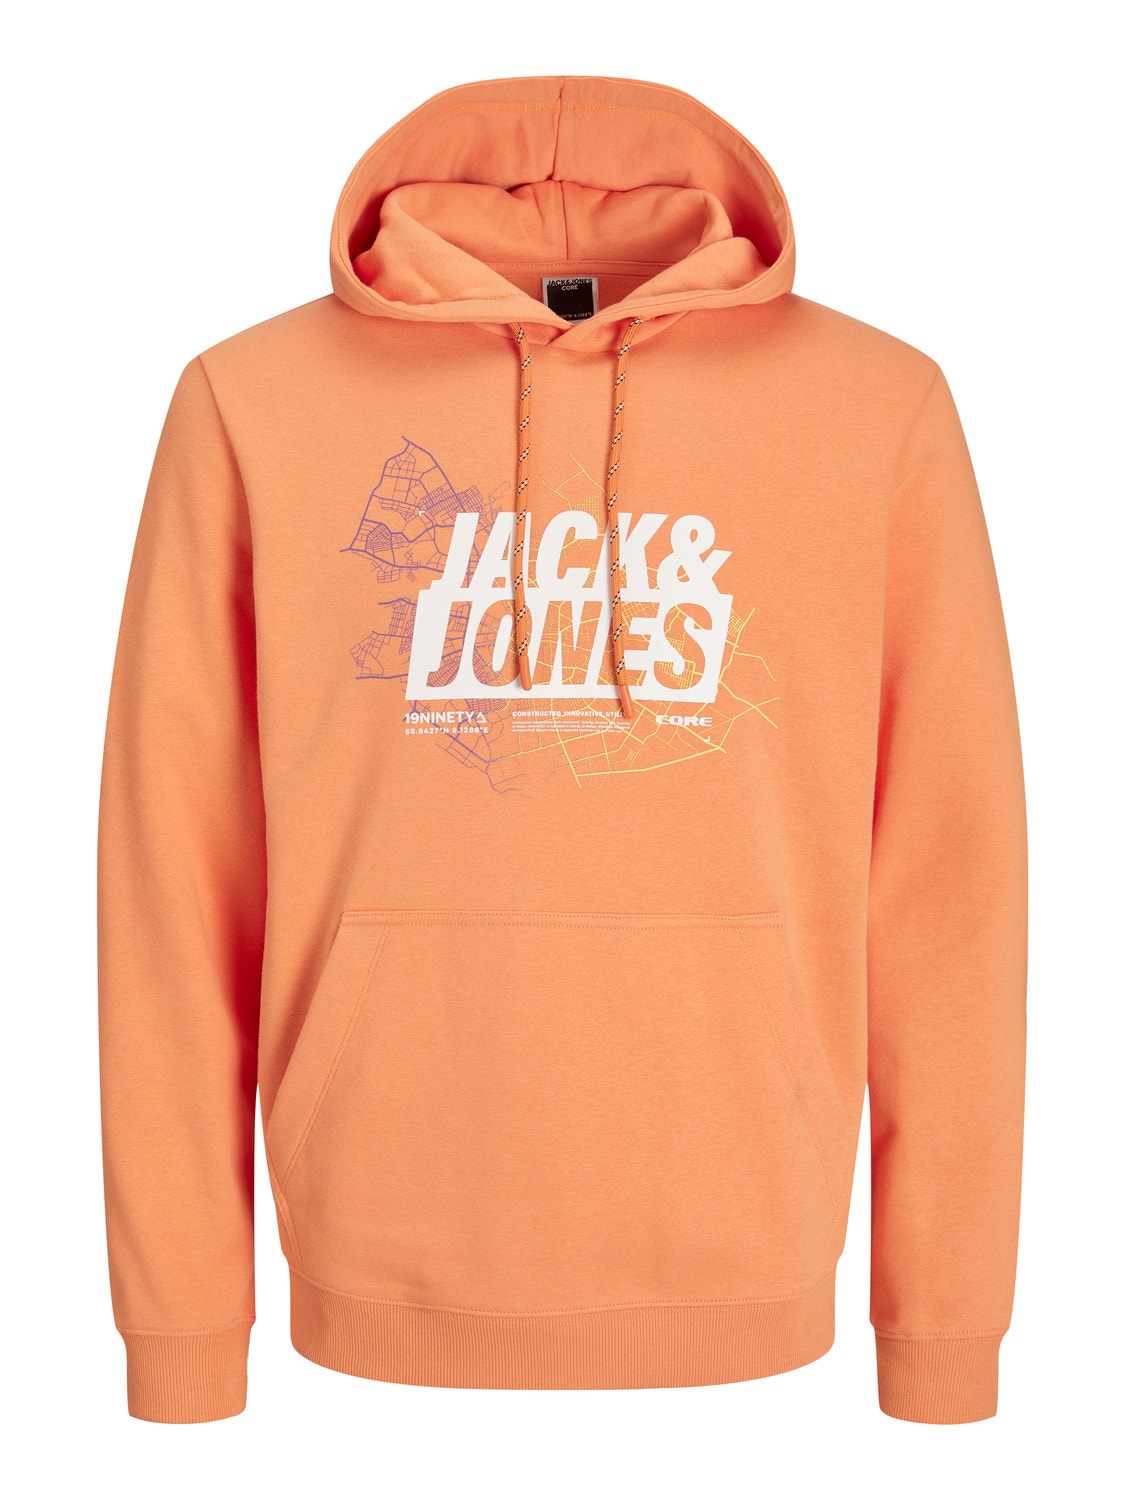 Jack & Jones Logo Huppari -Tangerine - 12252310